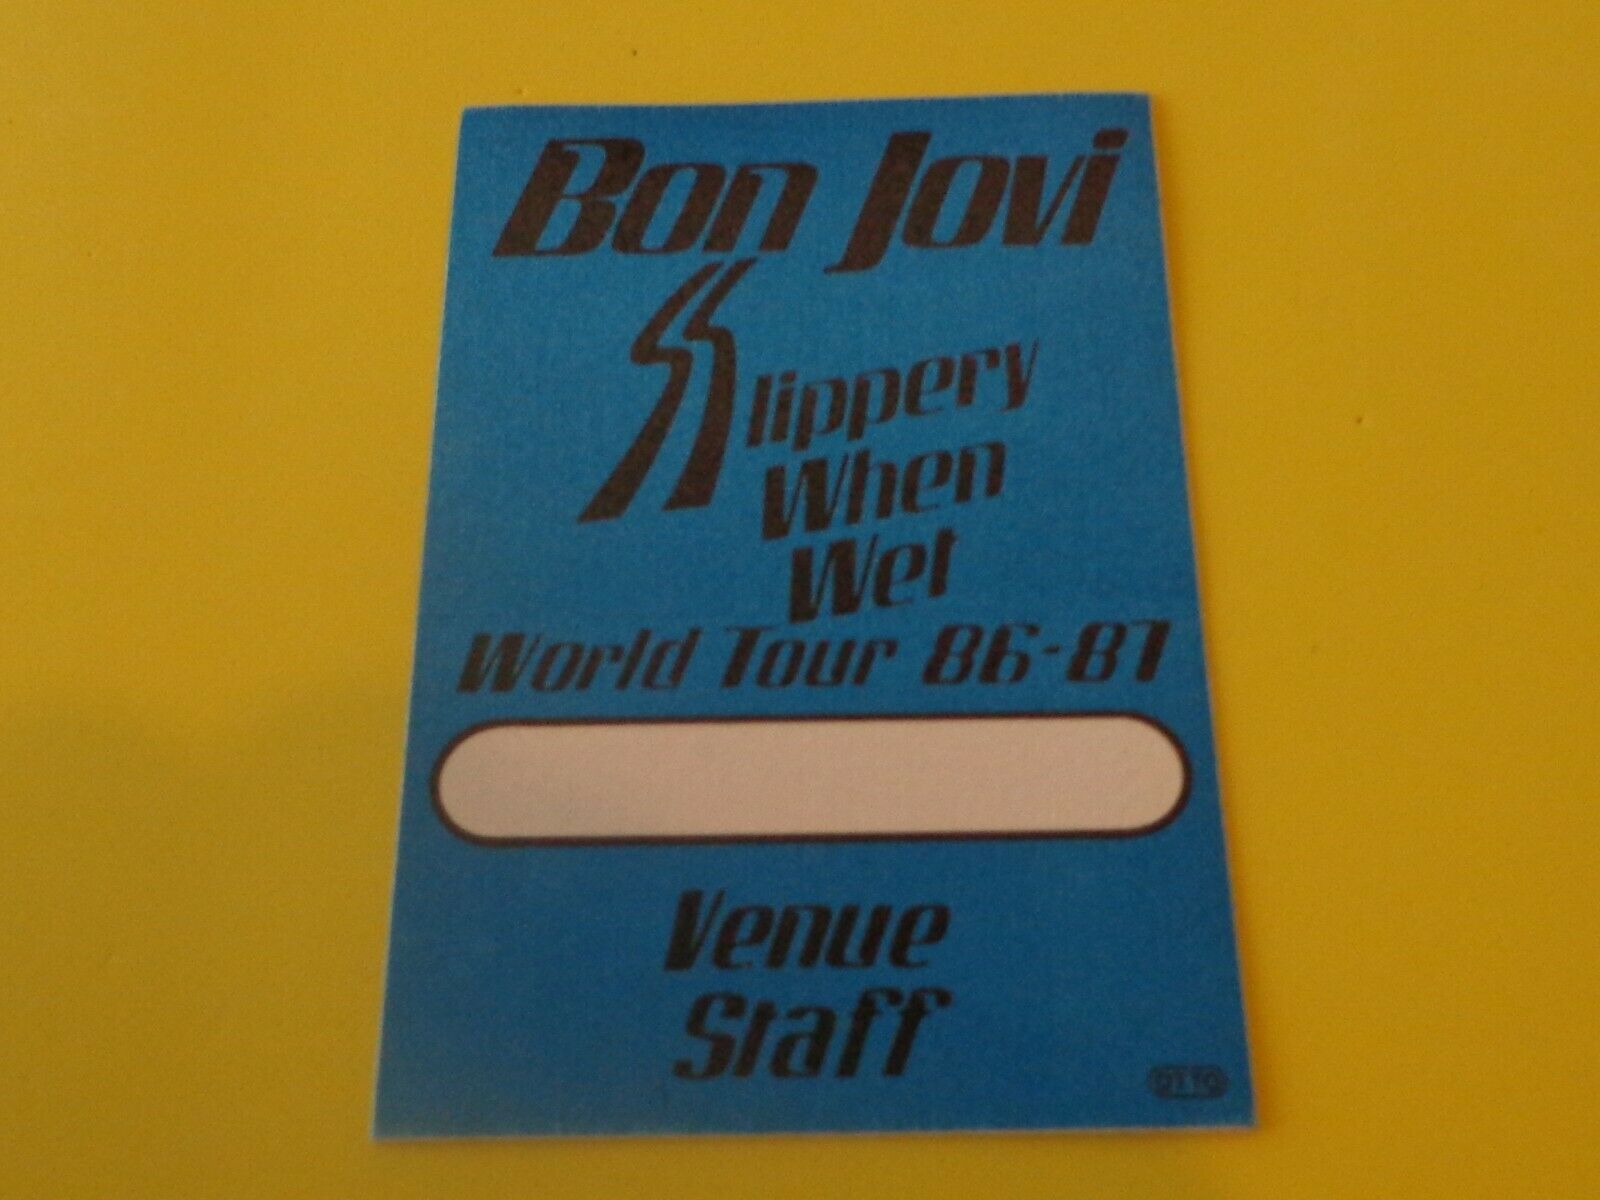 Bon Jovi Slippery When Wet Tour Satin Cloth Otto Pass Concert 86 87 Venue Staff